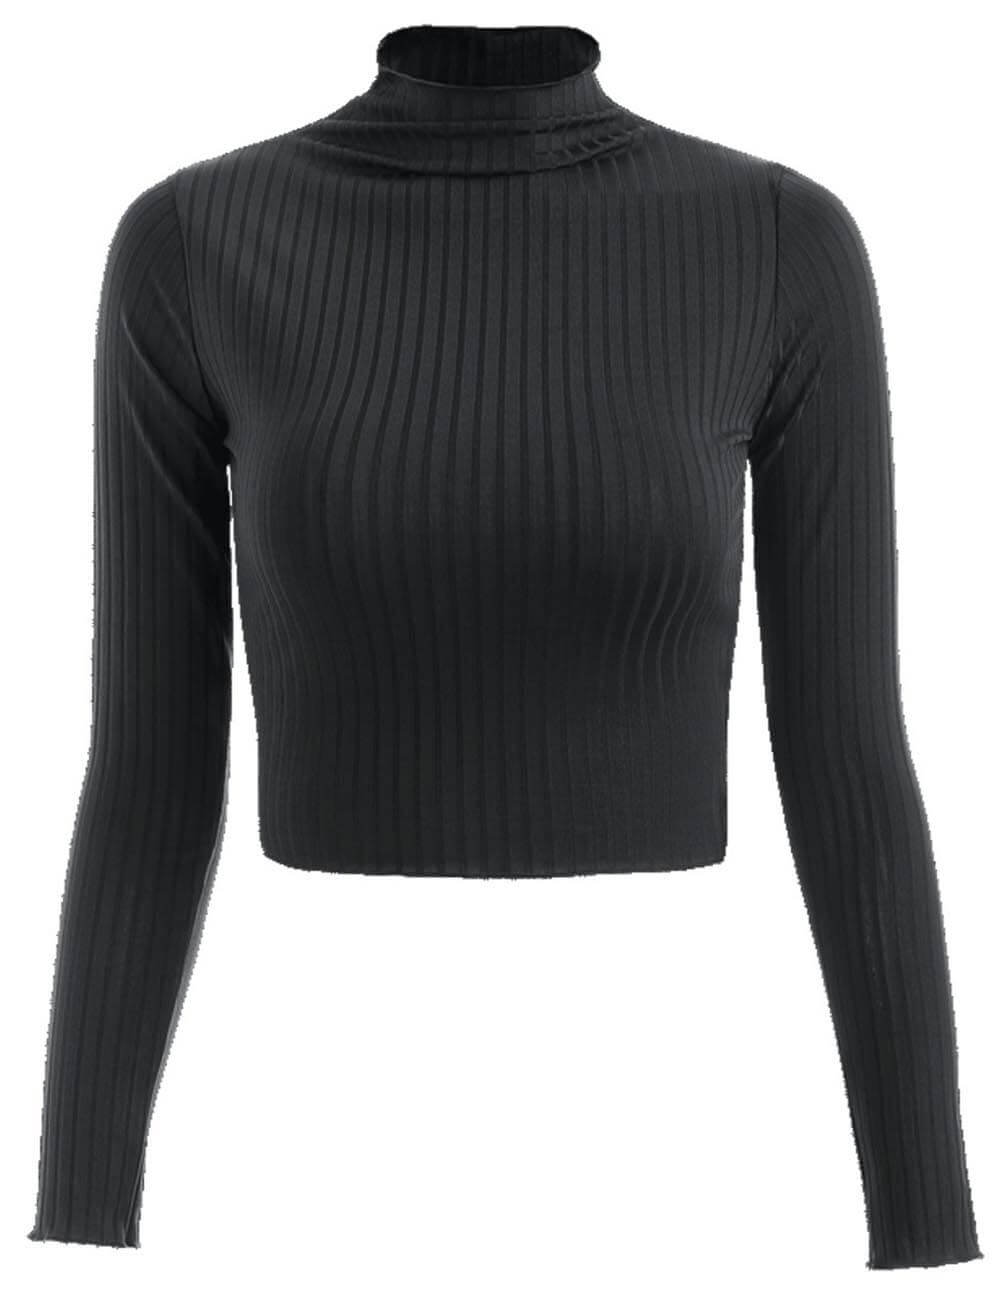  Women‘s Basic Plain Long Sleeve Rib-Knit Crop Top T-Shirt Turtleneck Soft Stretchy Layer Tee Top